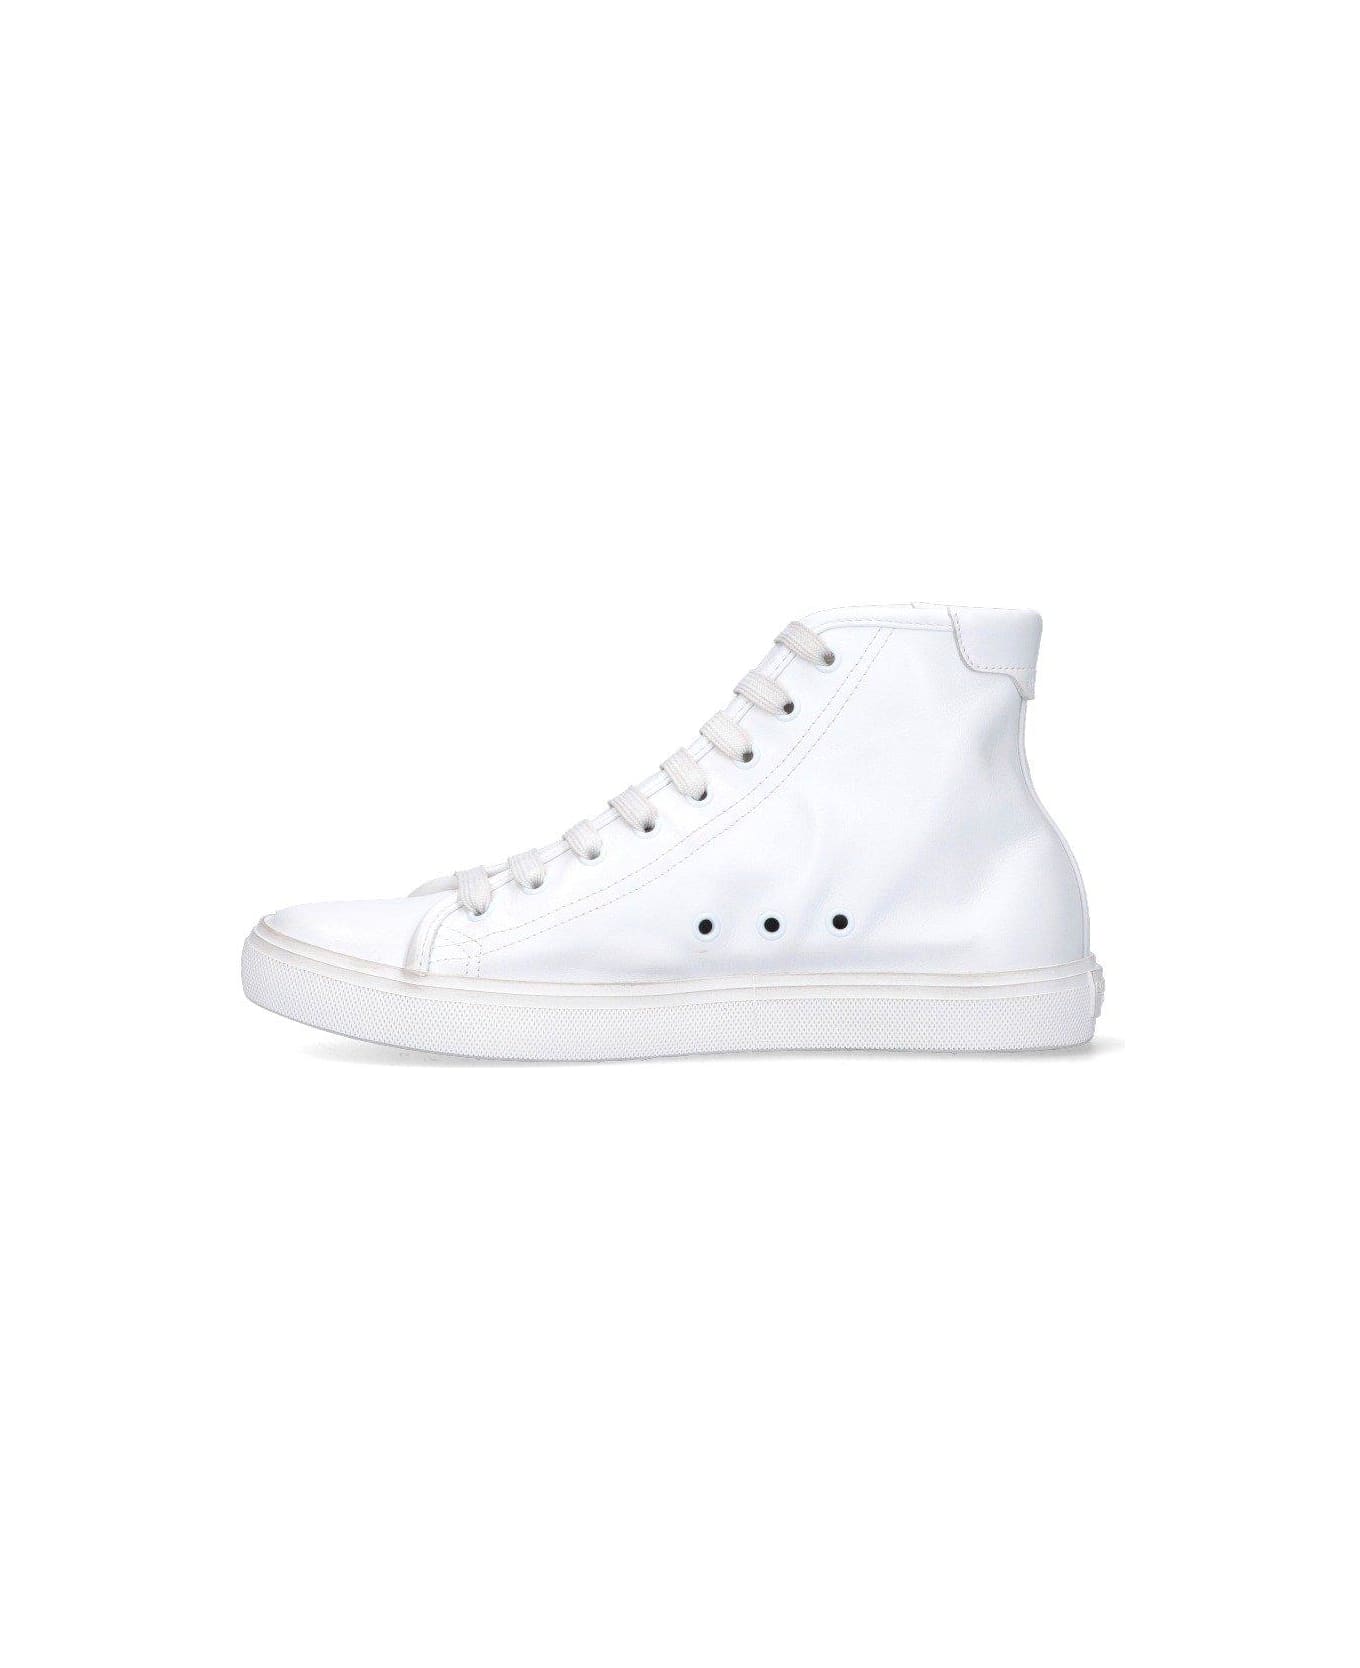 Saint Laurent Malibu Mid-top Sneakers - WHITE